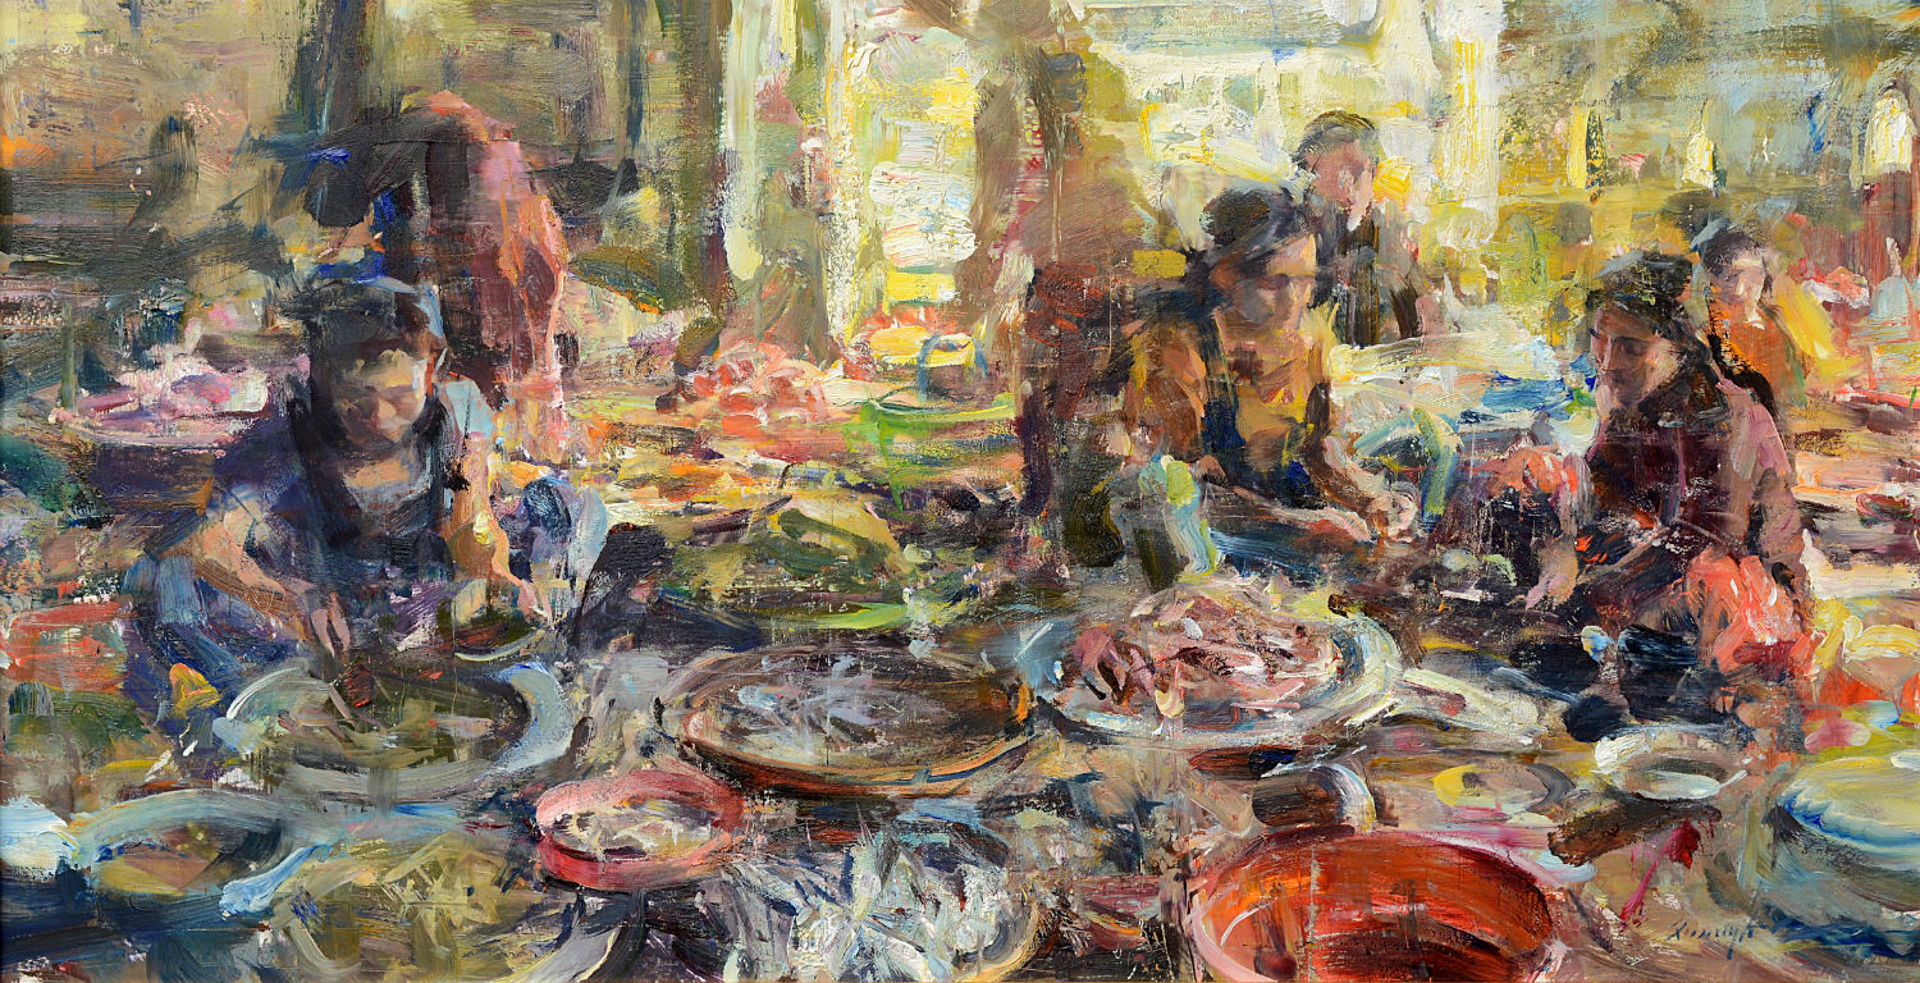 Fish Market Chaos by Quang Ho